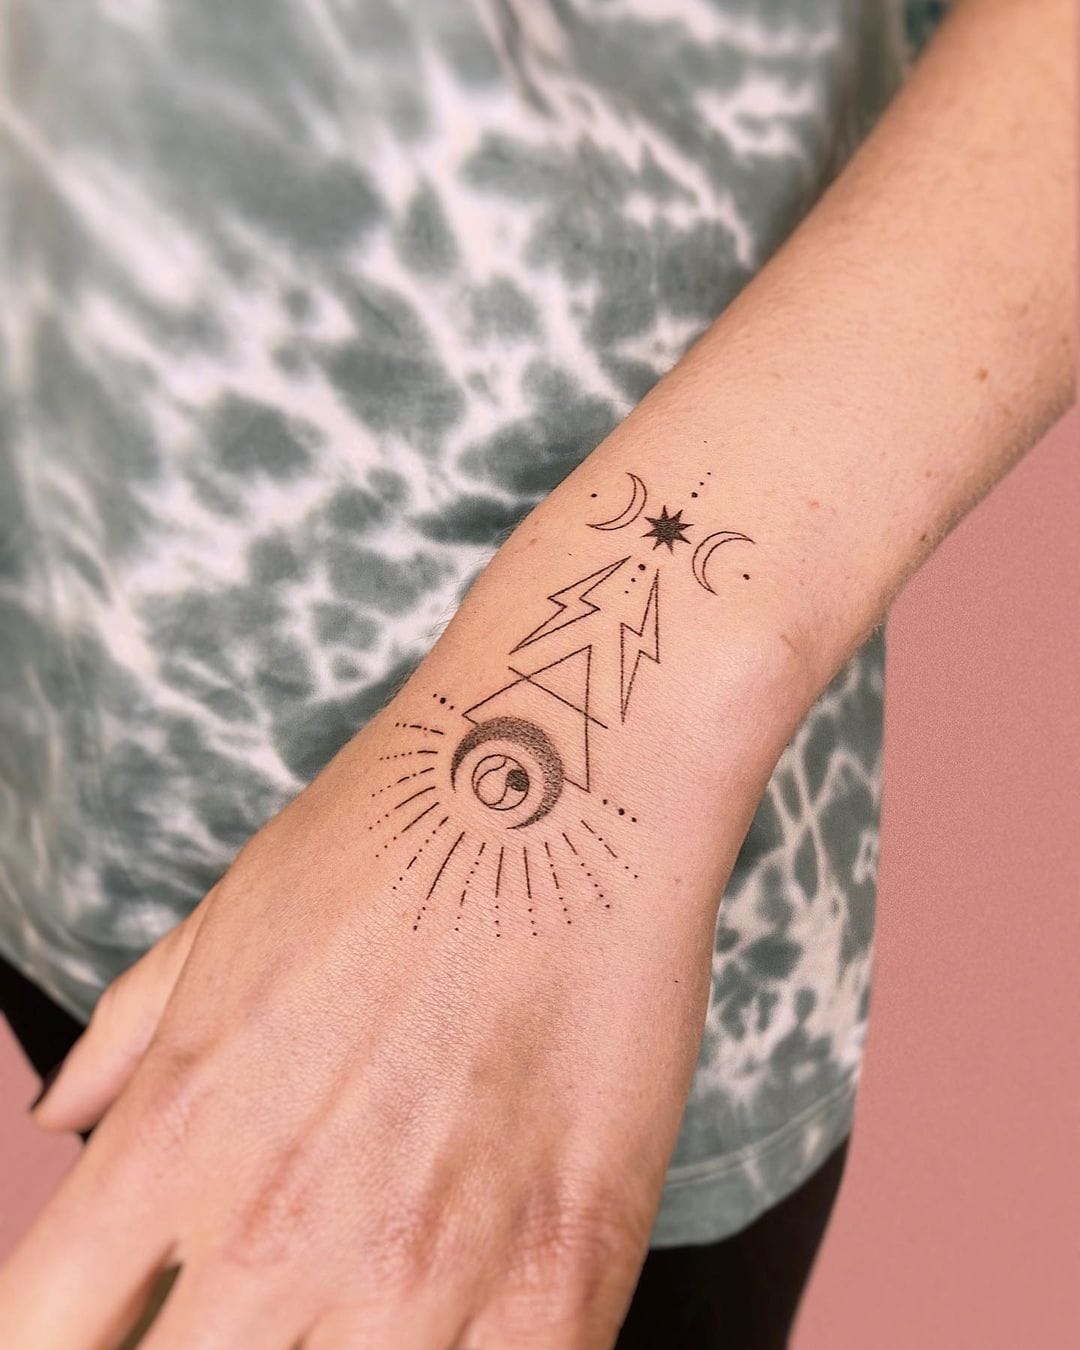 Leo Zodiac symbol tattoo on the inner forearm.